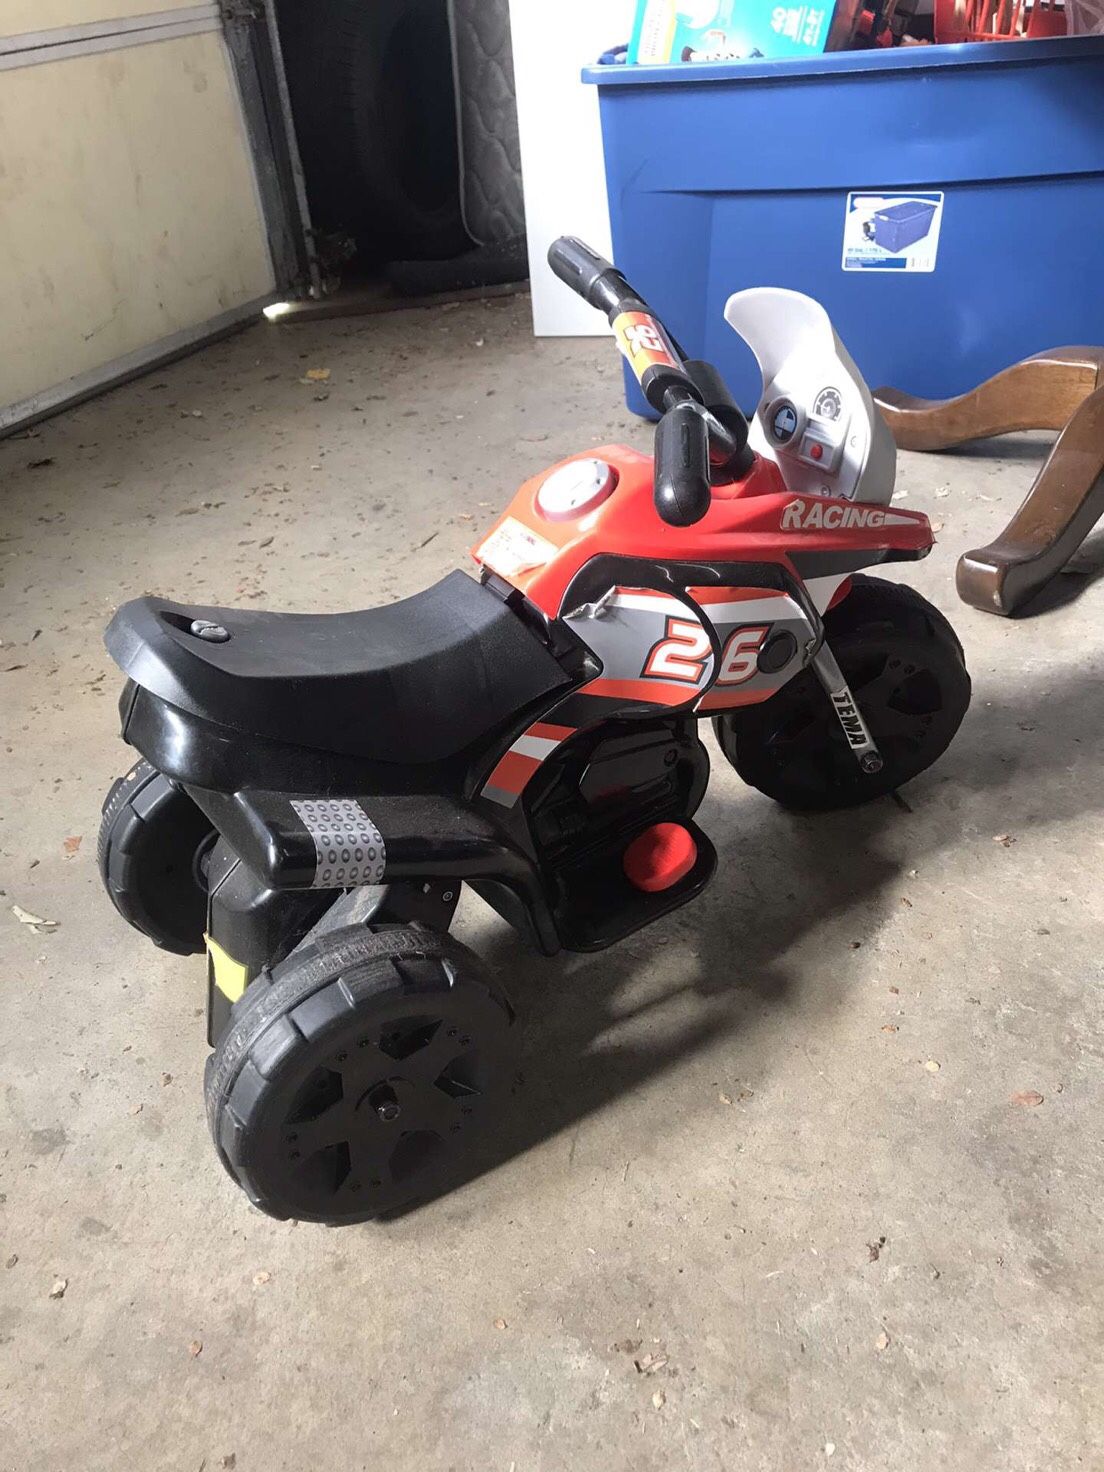 Toddler motorcycle missing 12 volt charger